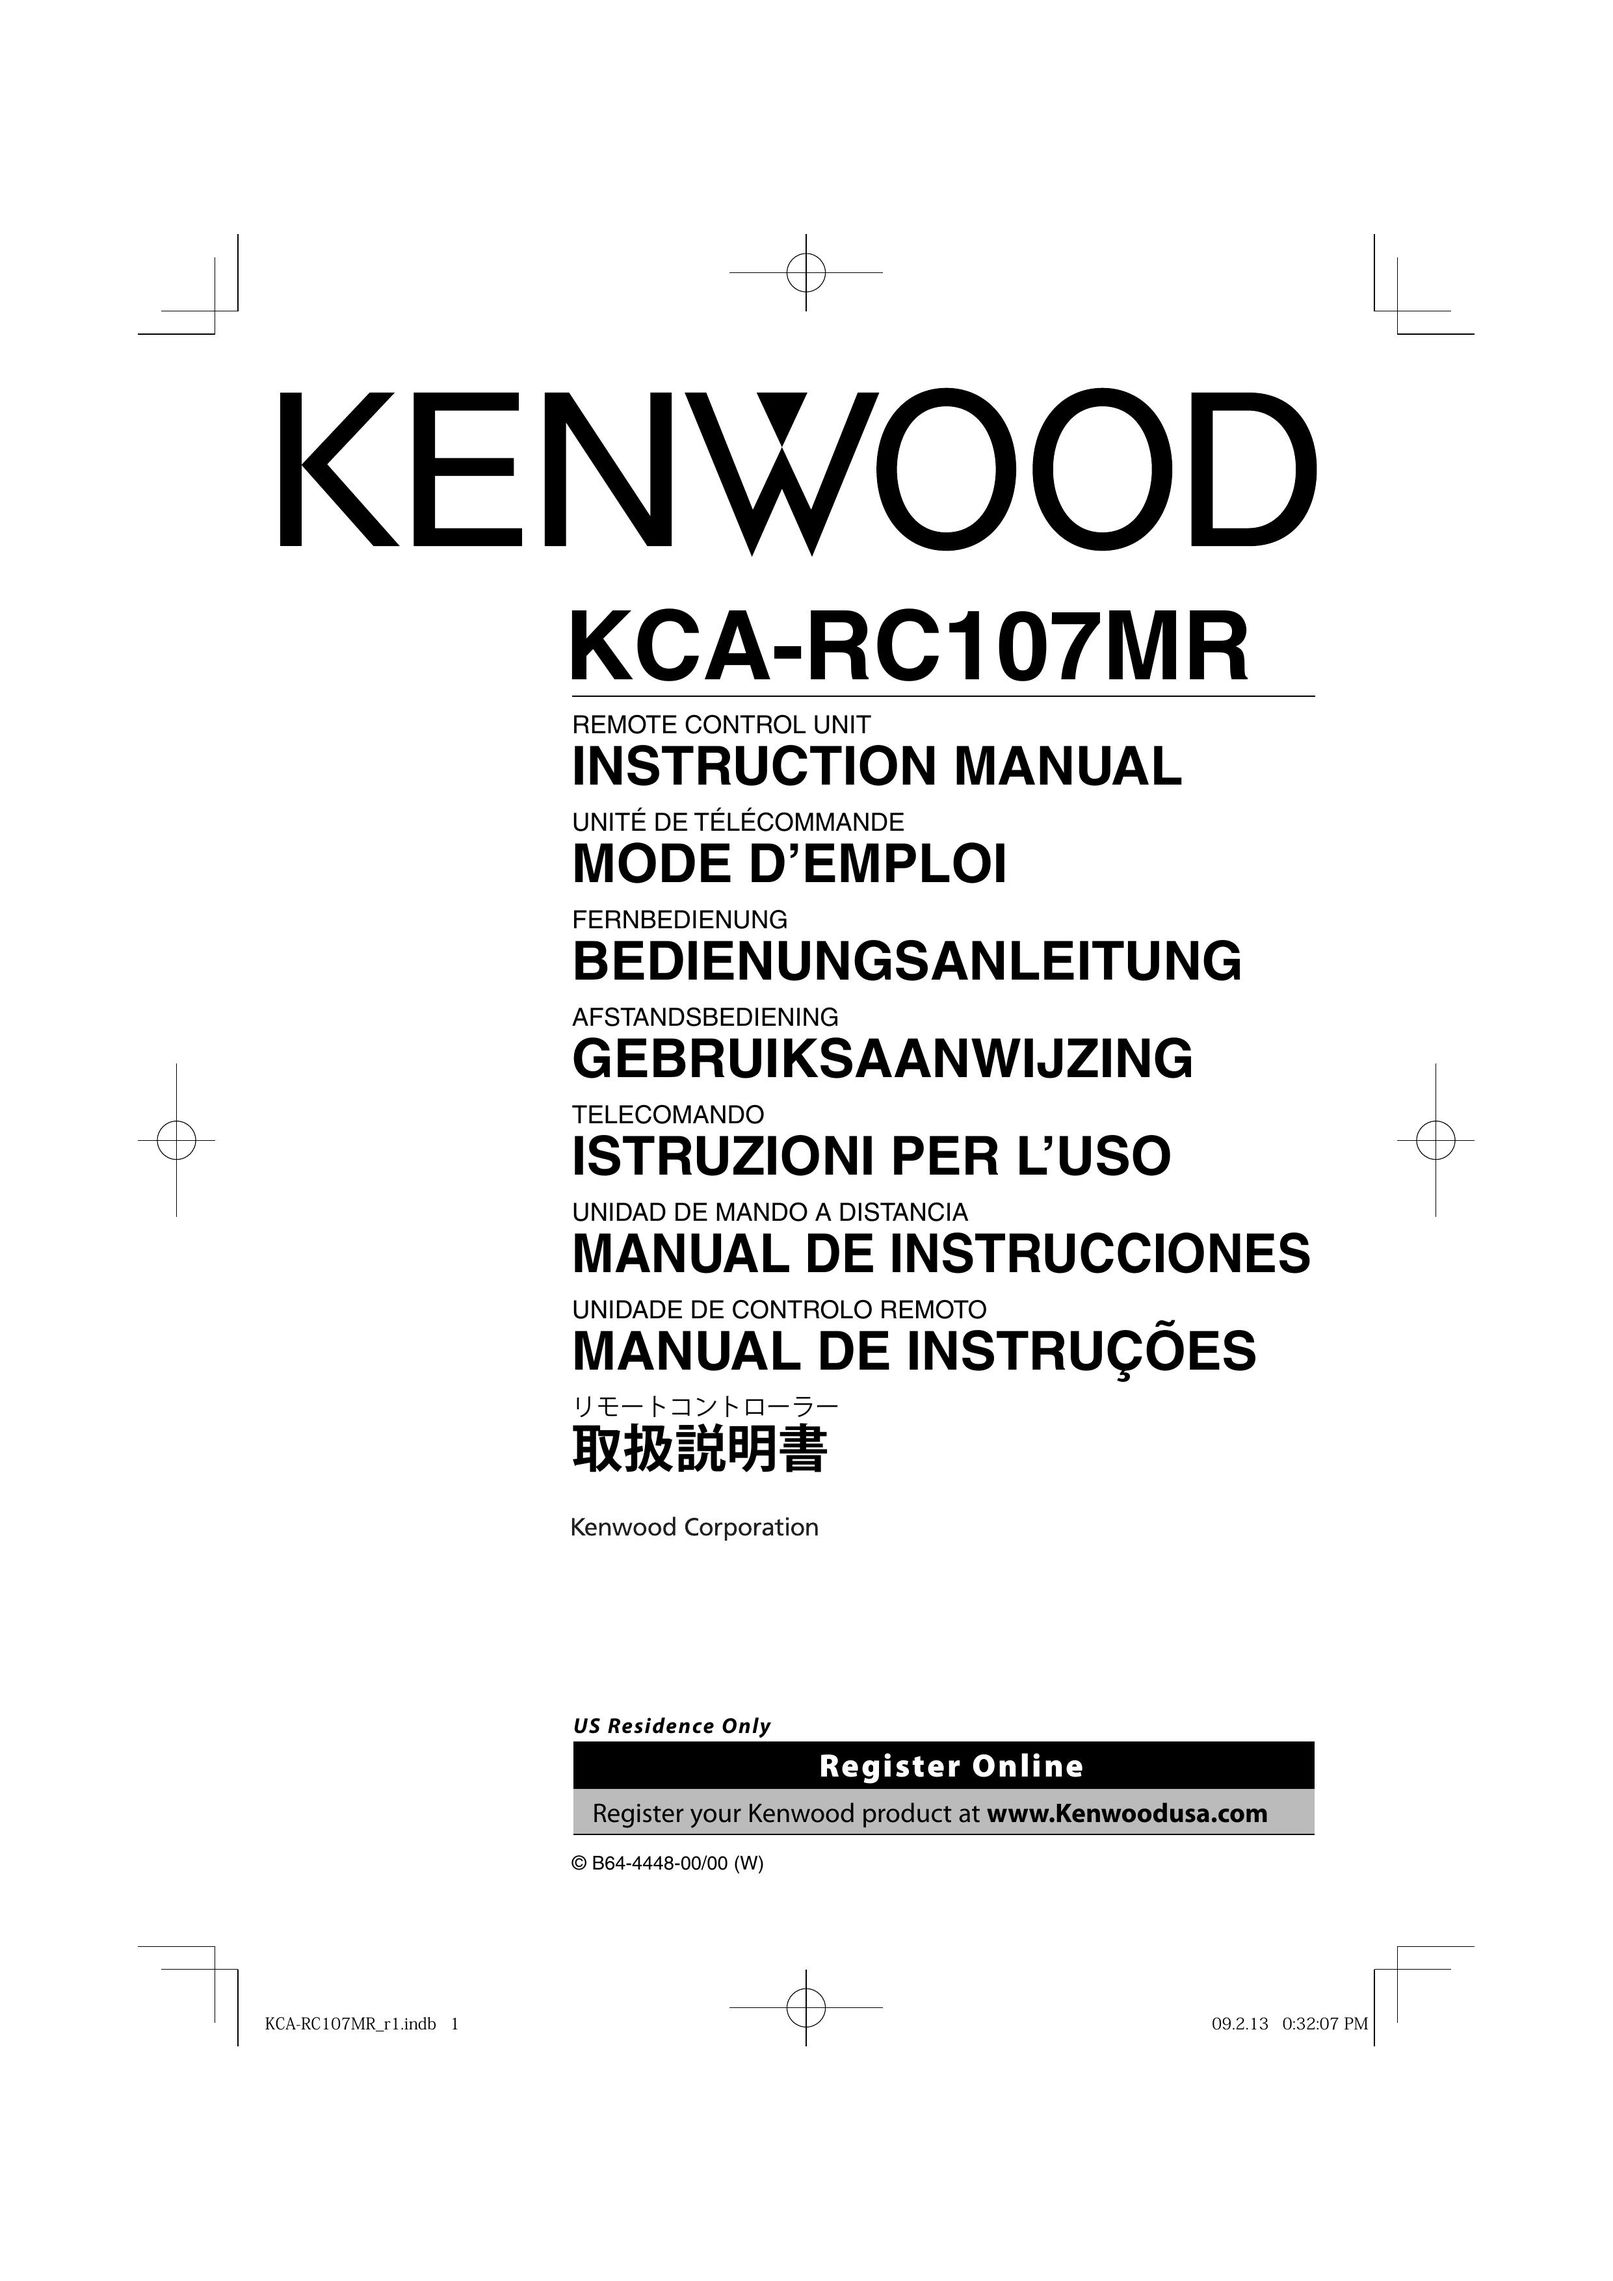 Kenwood KCA-RC107MR Universal Remote User Manual